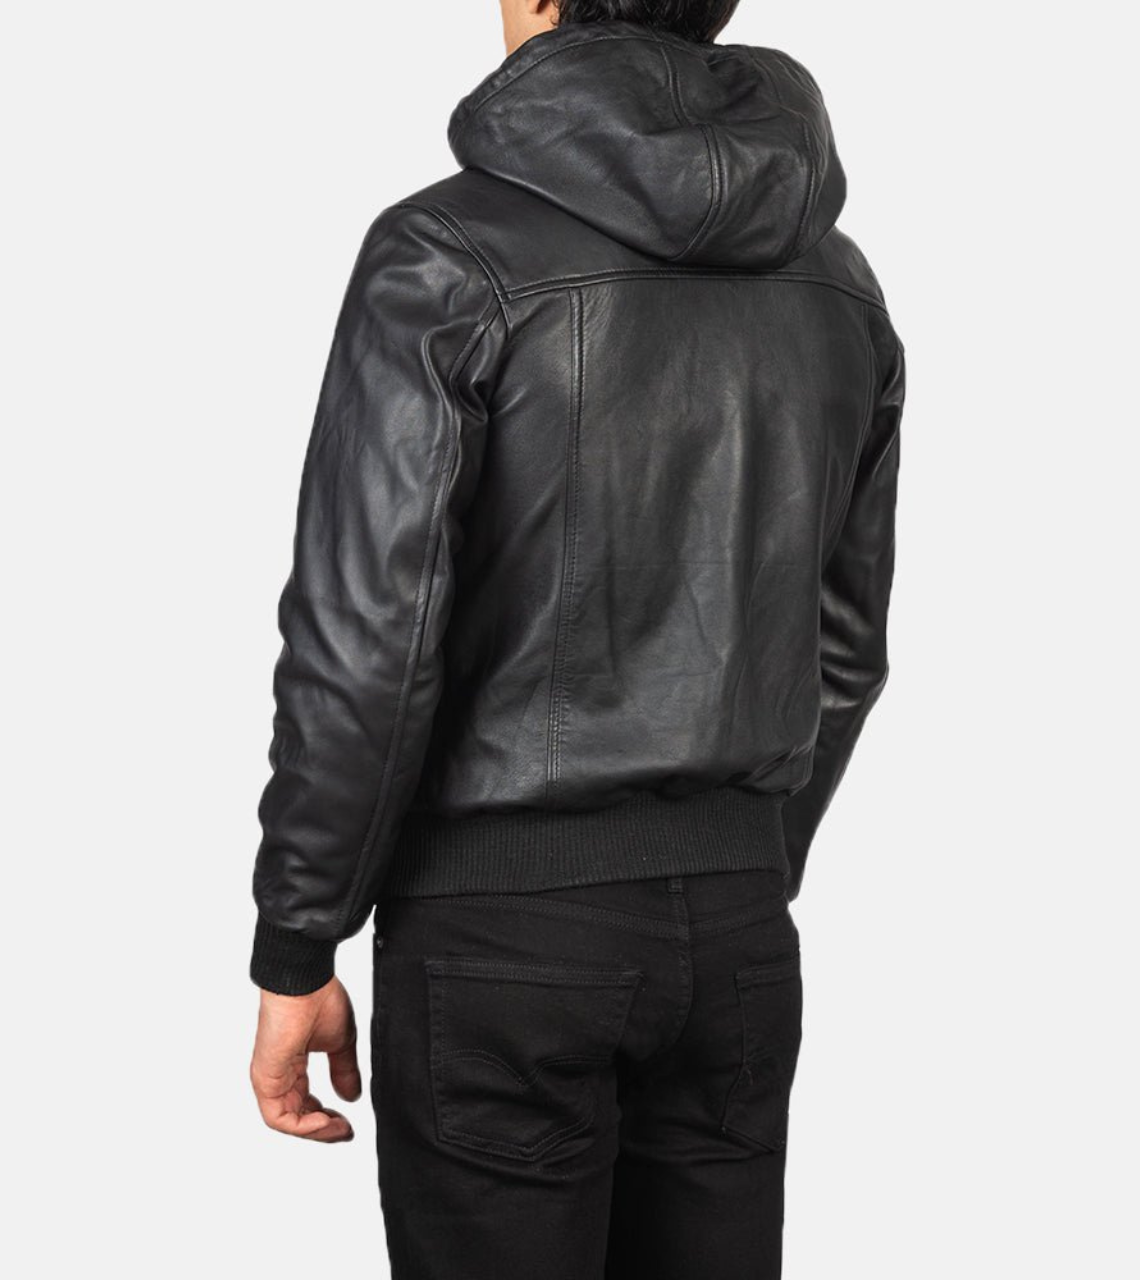  Hooded Men's Leather Bomber Jacket